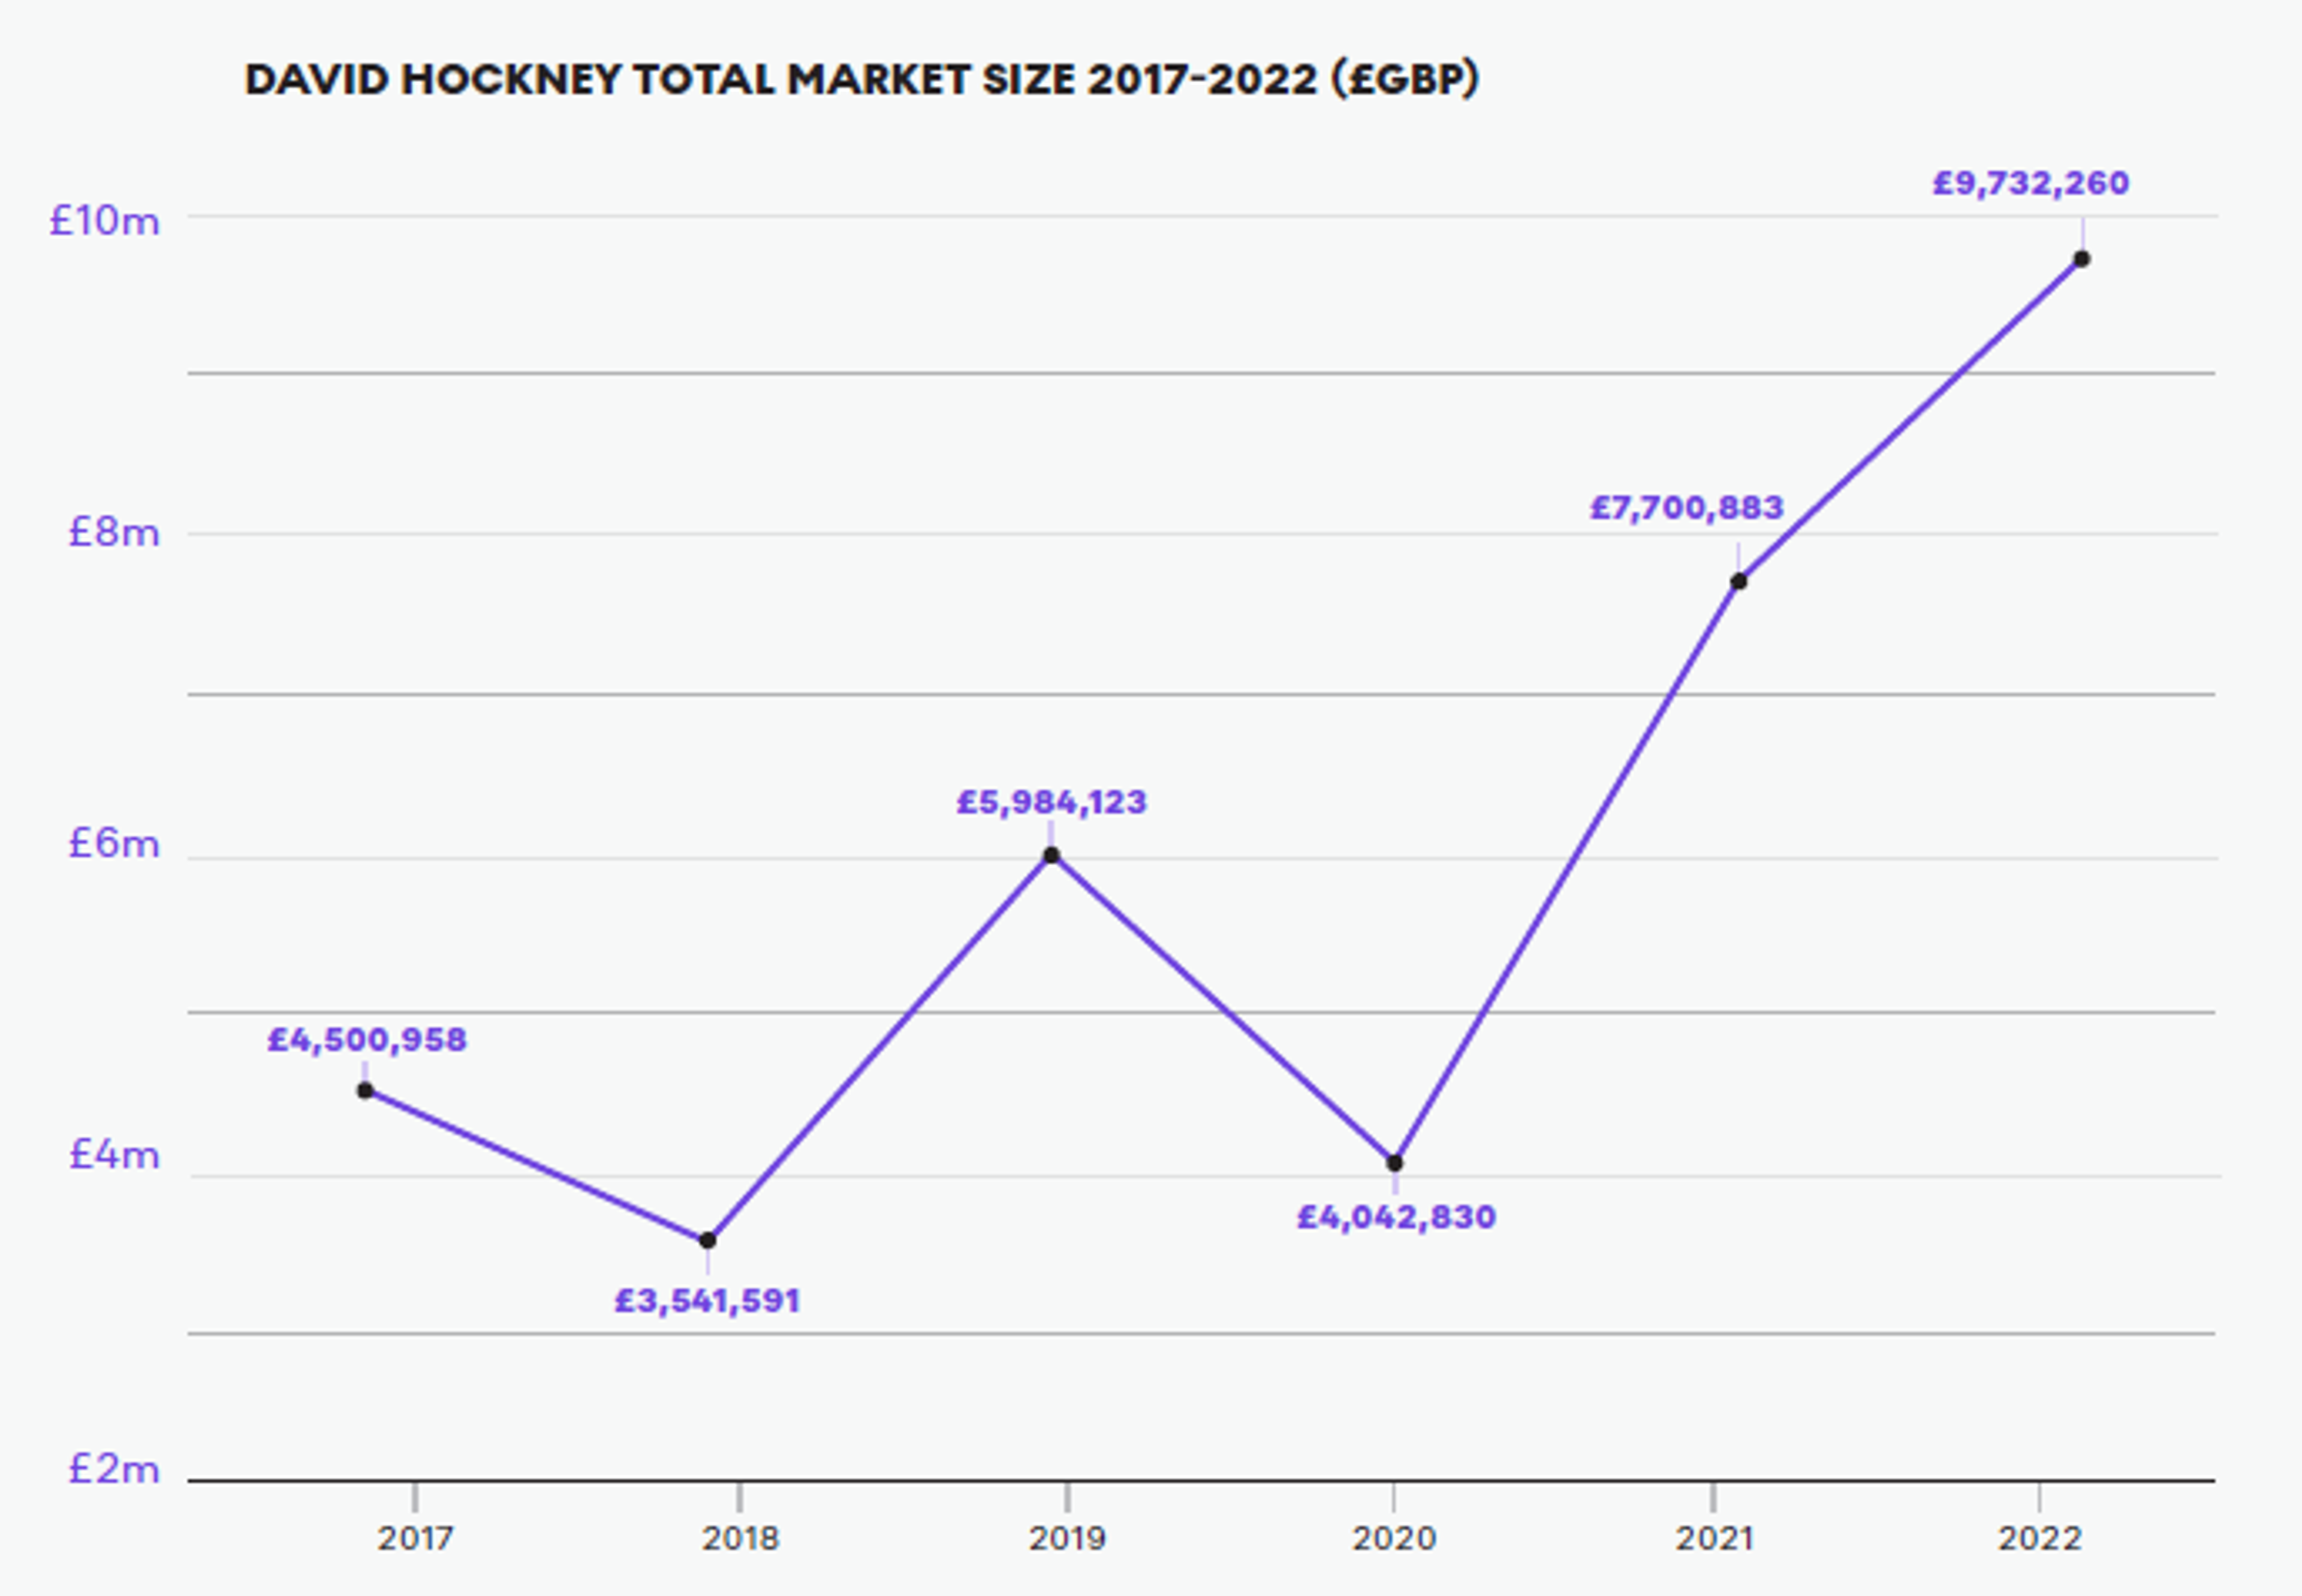 David Hockney’s Total Market Size 2017-2022 – MyArtBroker